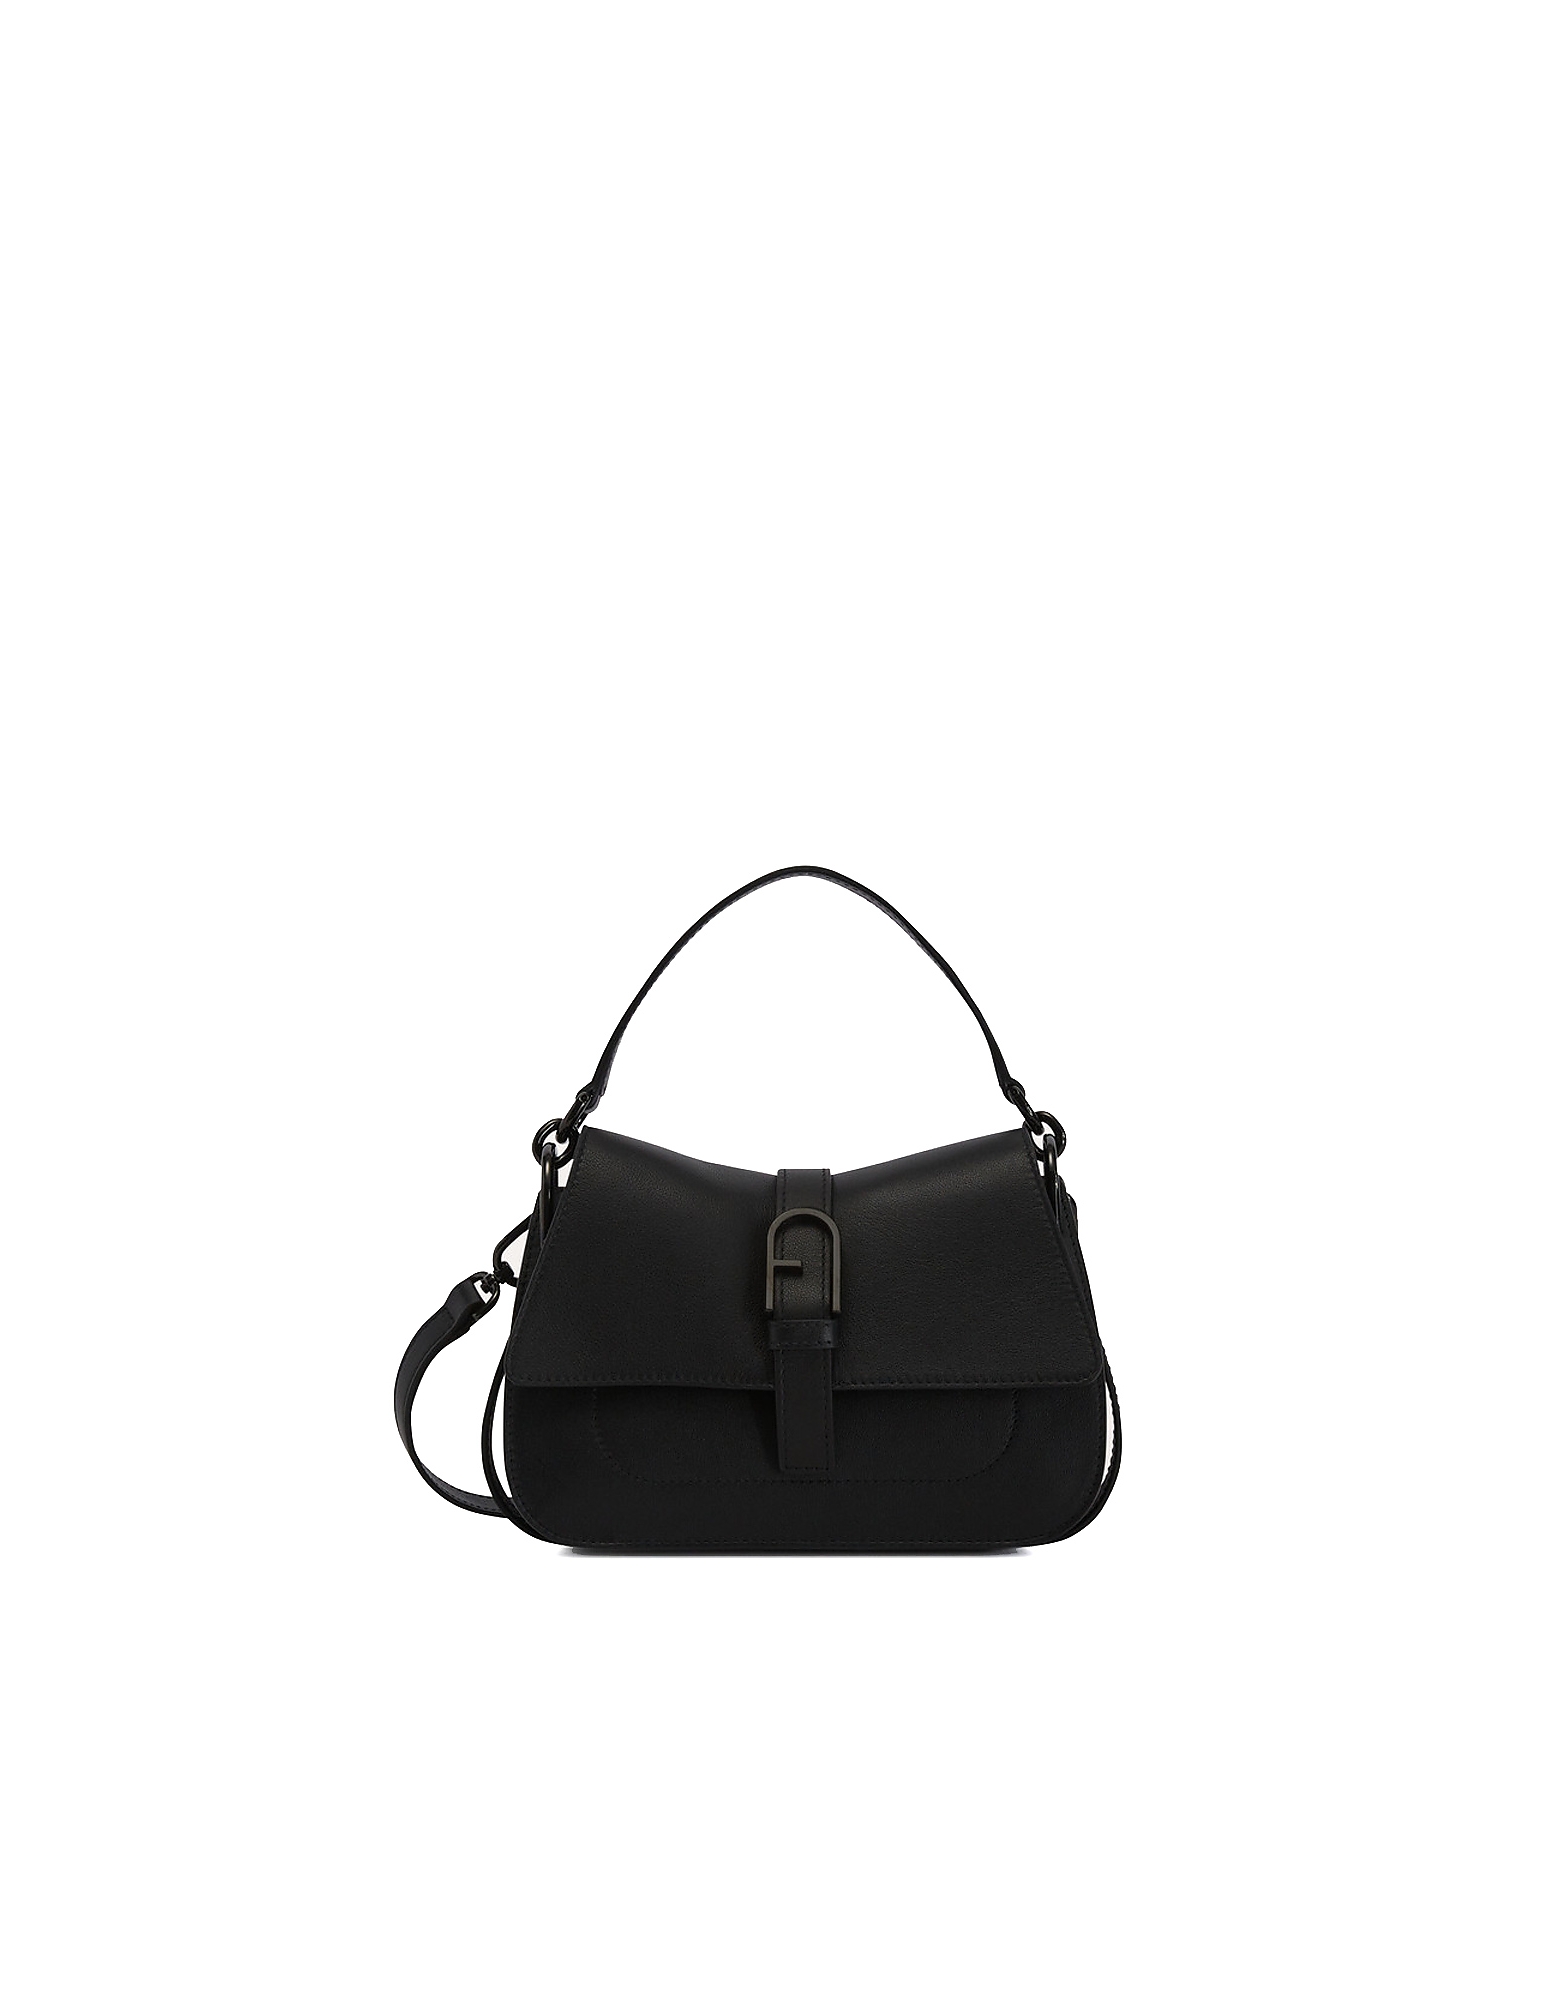 Furla Designer Handbags Women's Bag